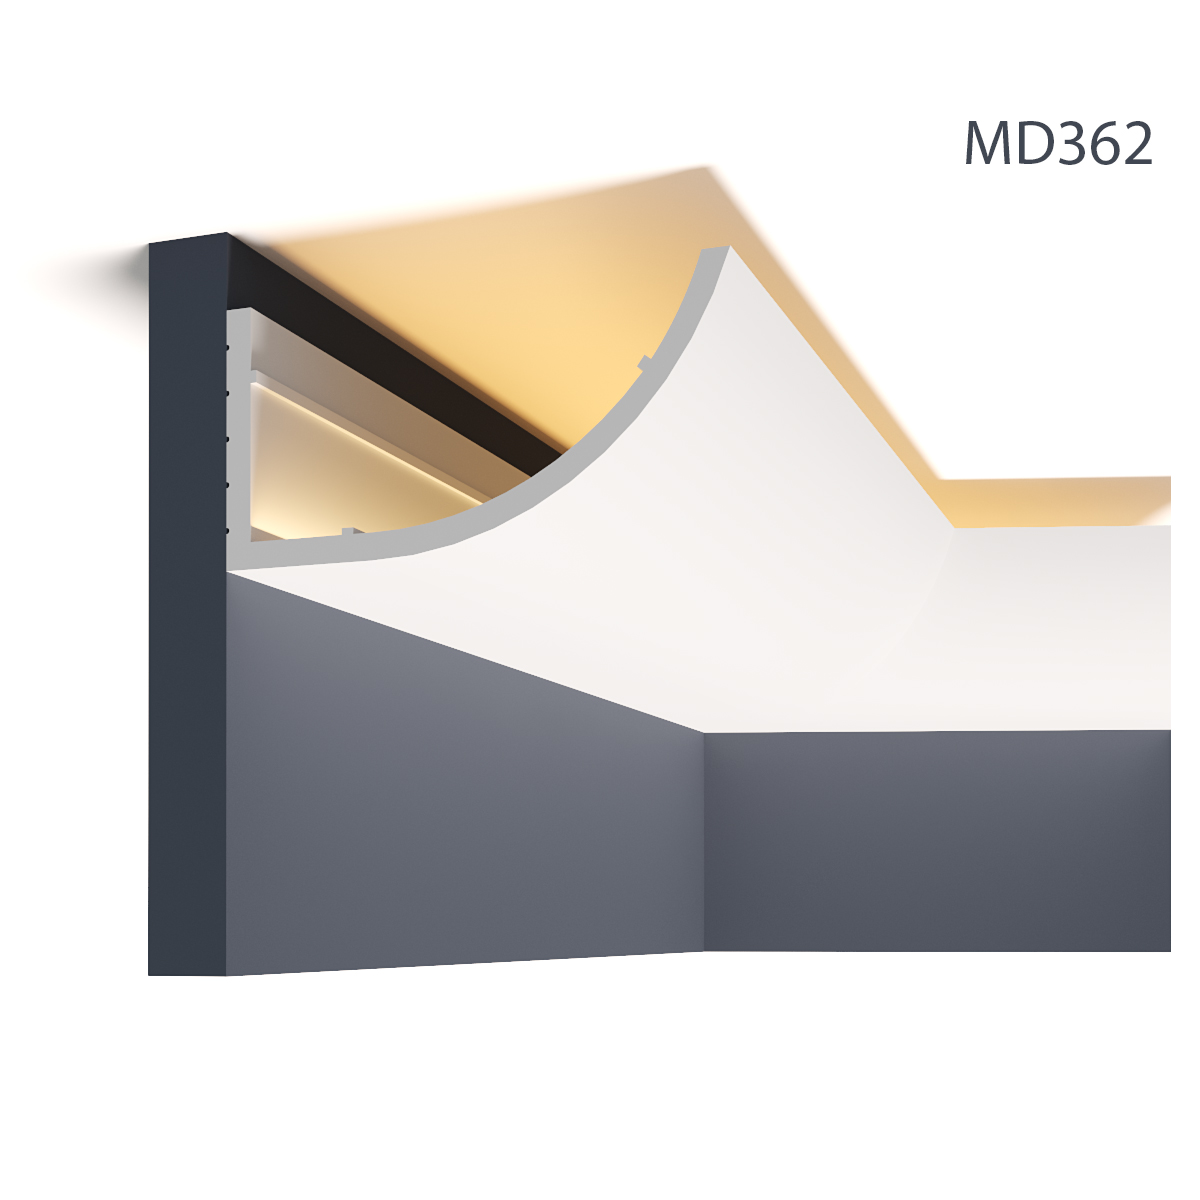 Cornisa decorativa pentru LED MD362, 200 X 17.2 X 8.6 cm, Mardom Decor, Cornișe tavan 